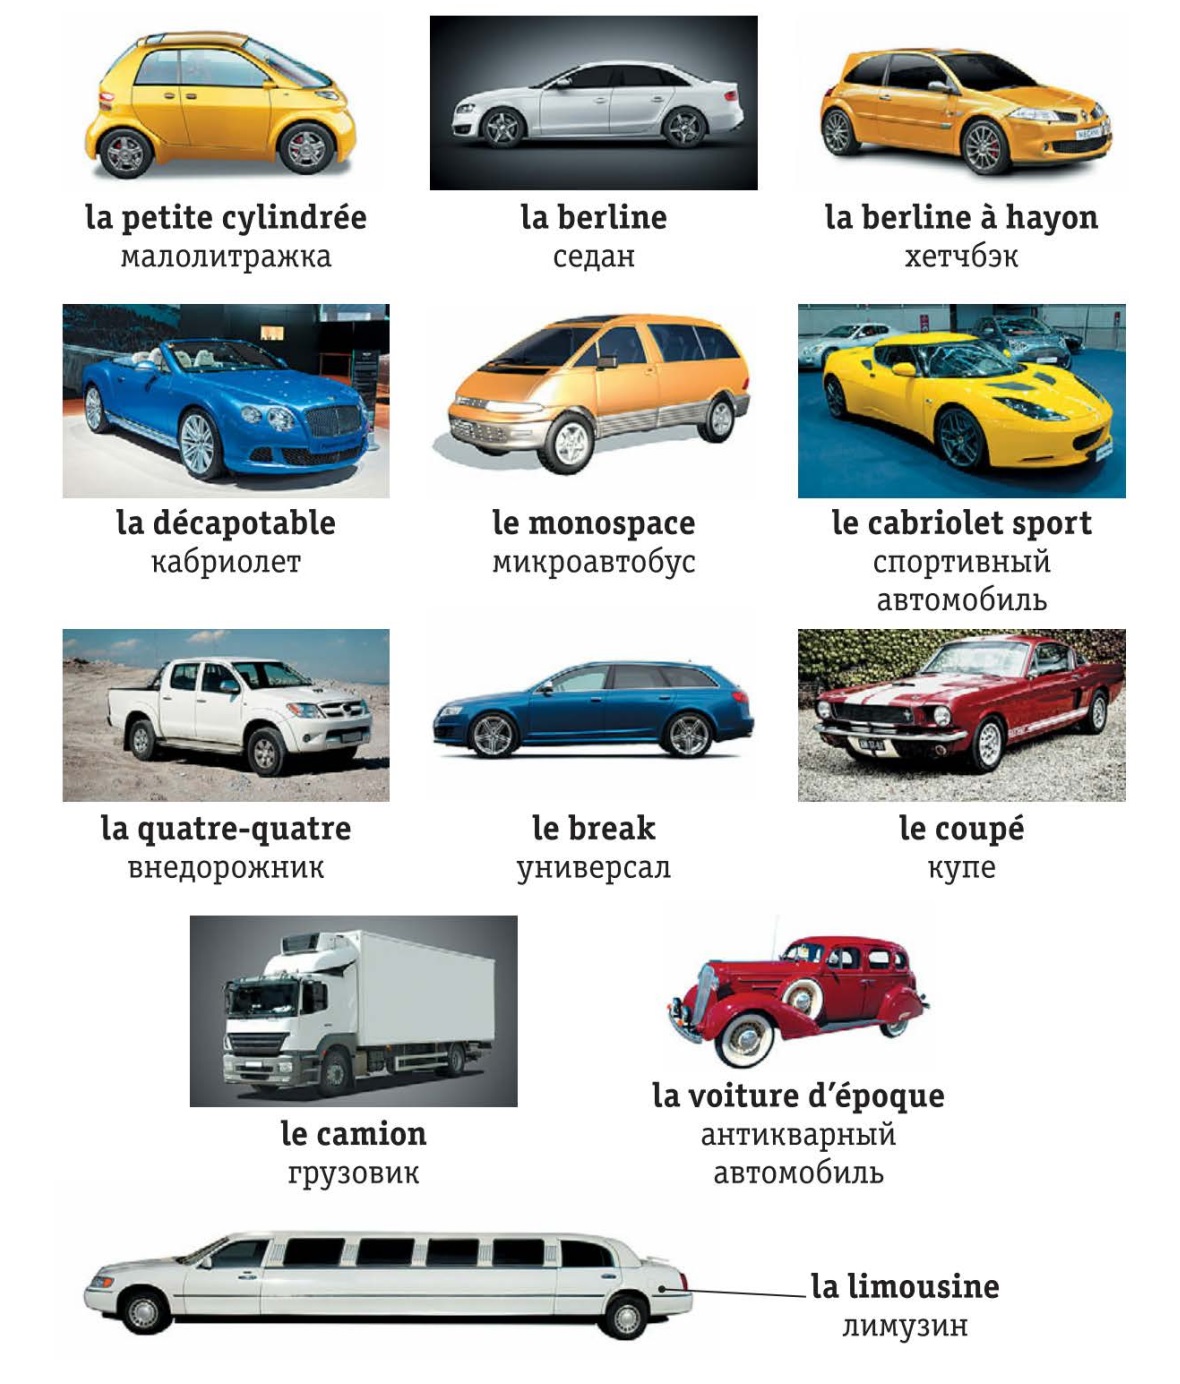 Название всех французских машин